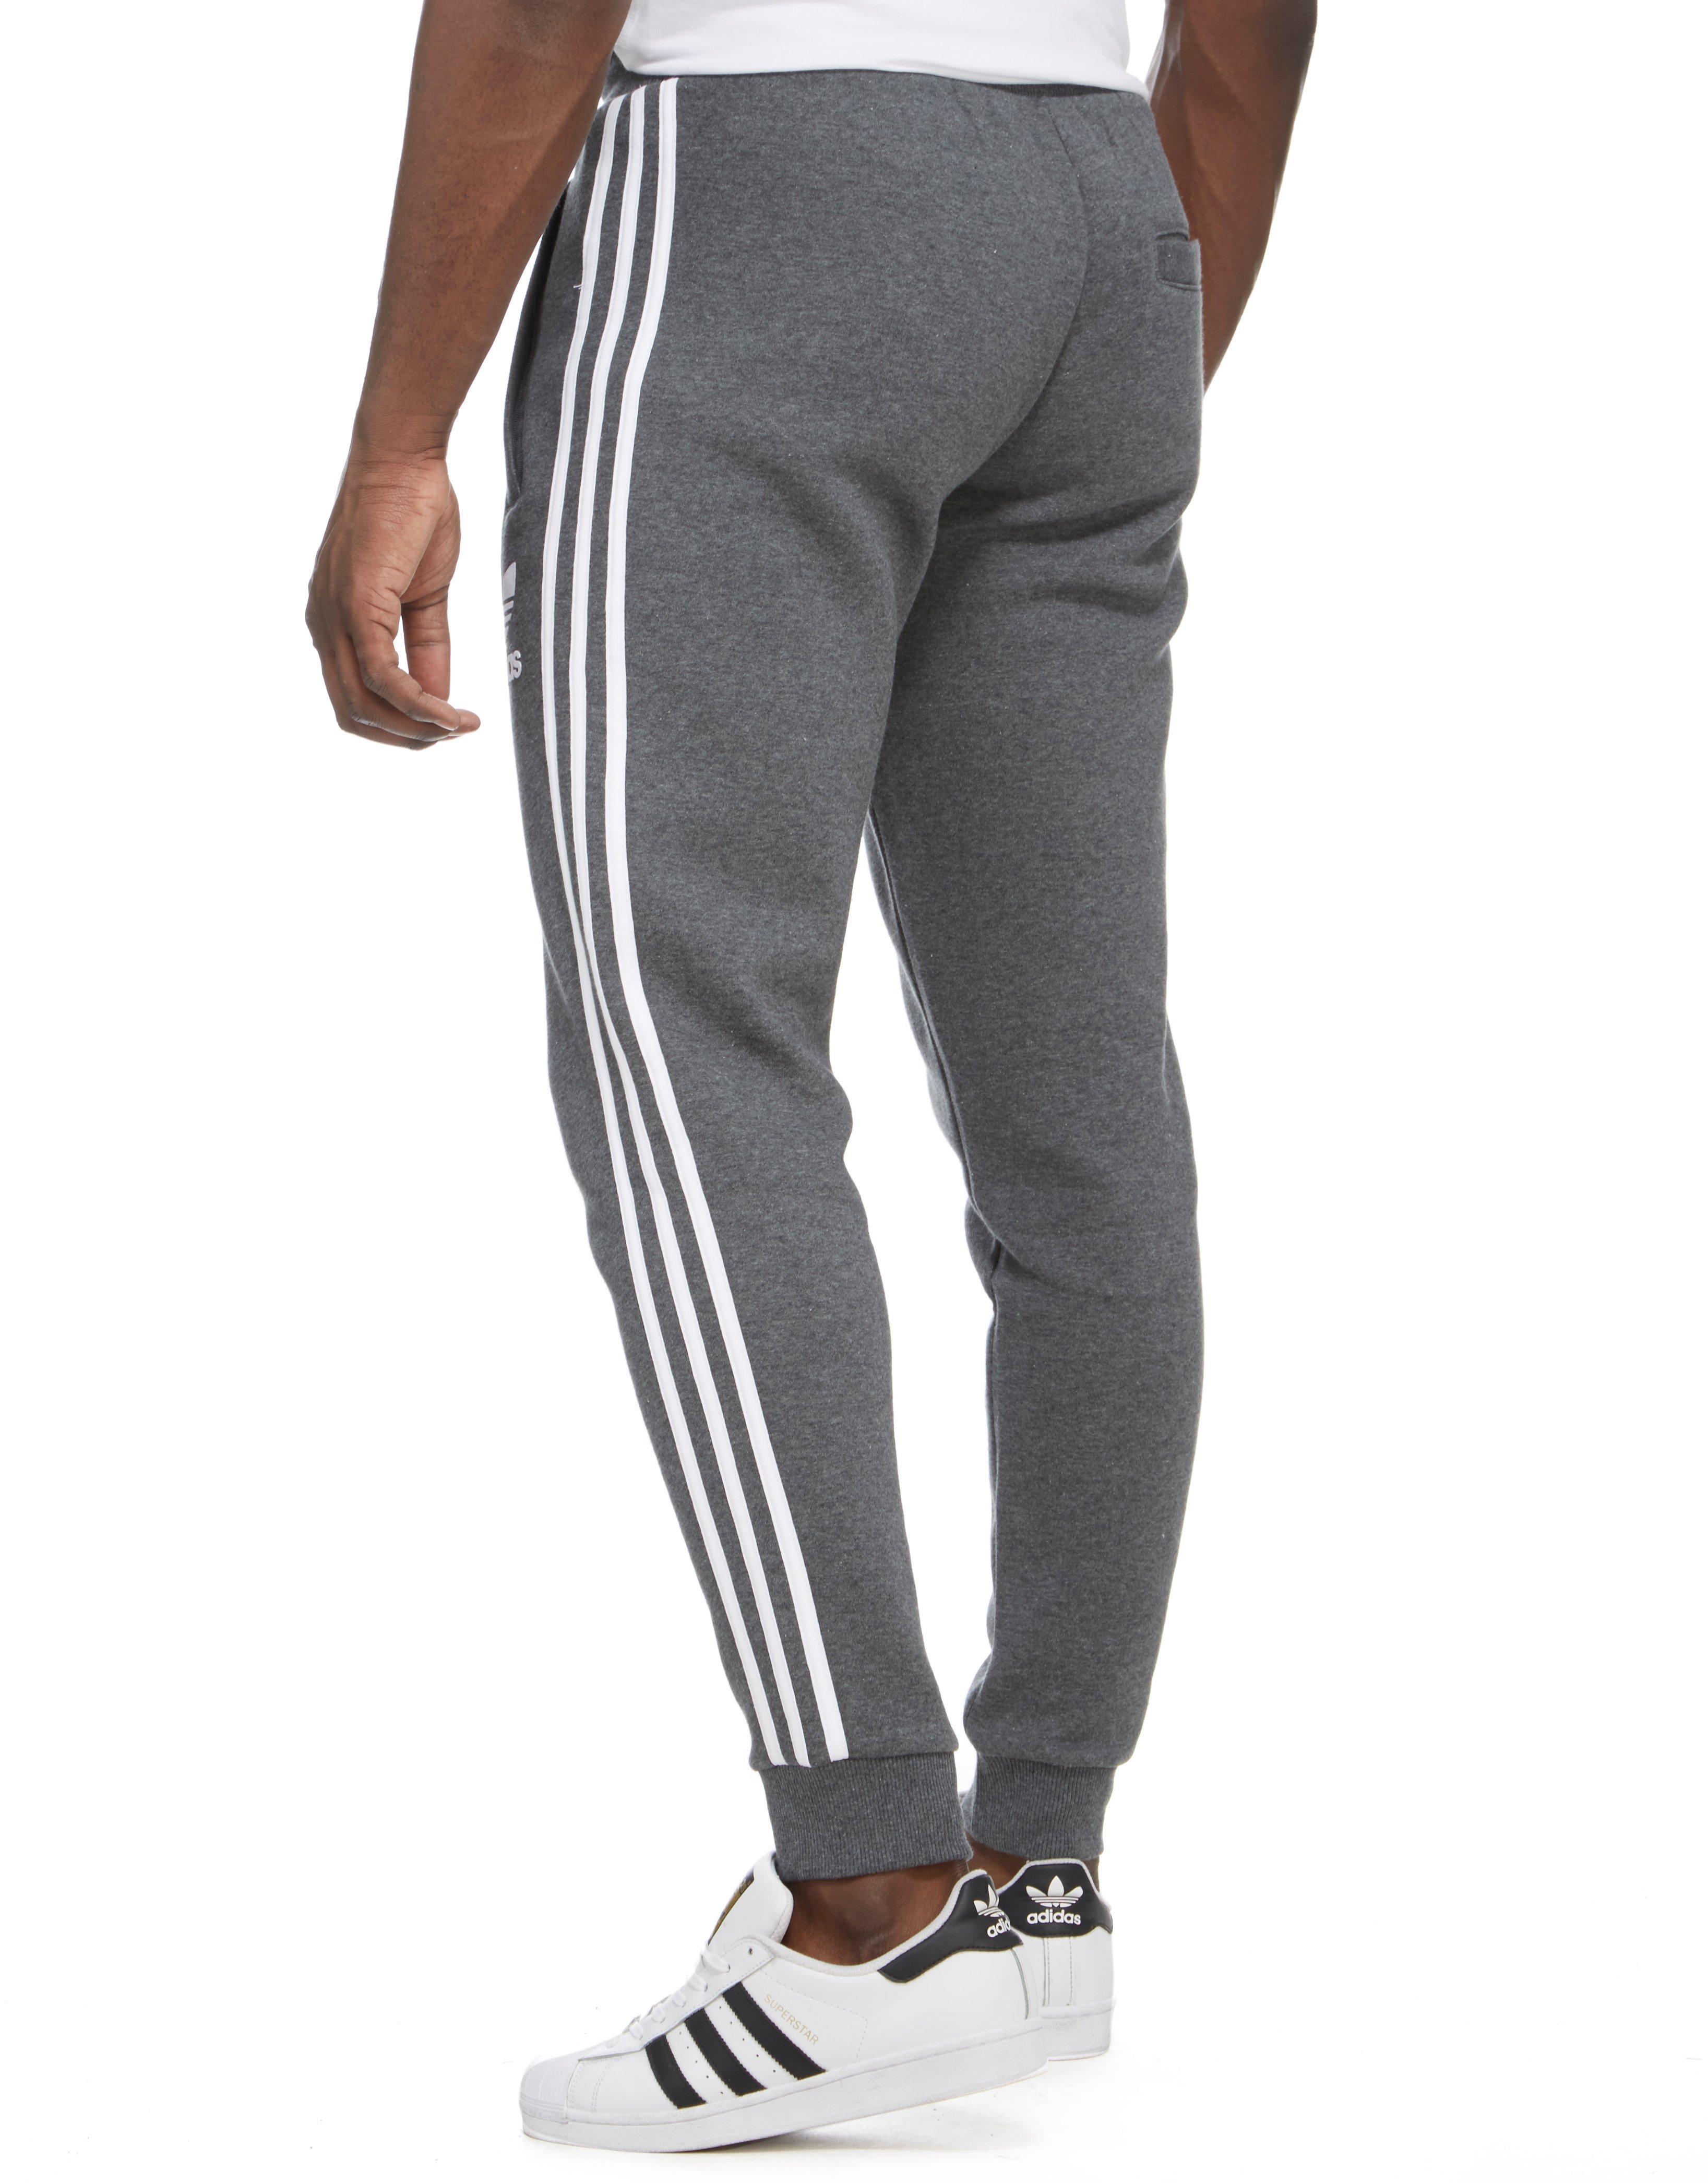 Lyst - adidas Originals California Pants in Gray for Men